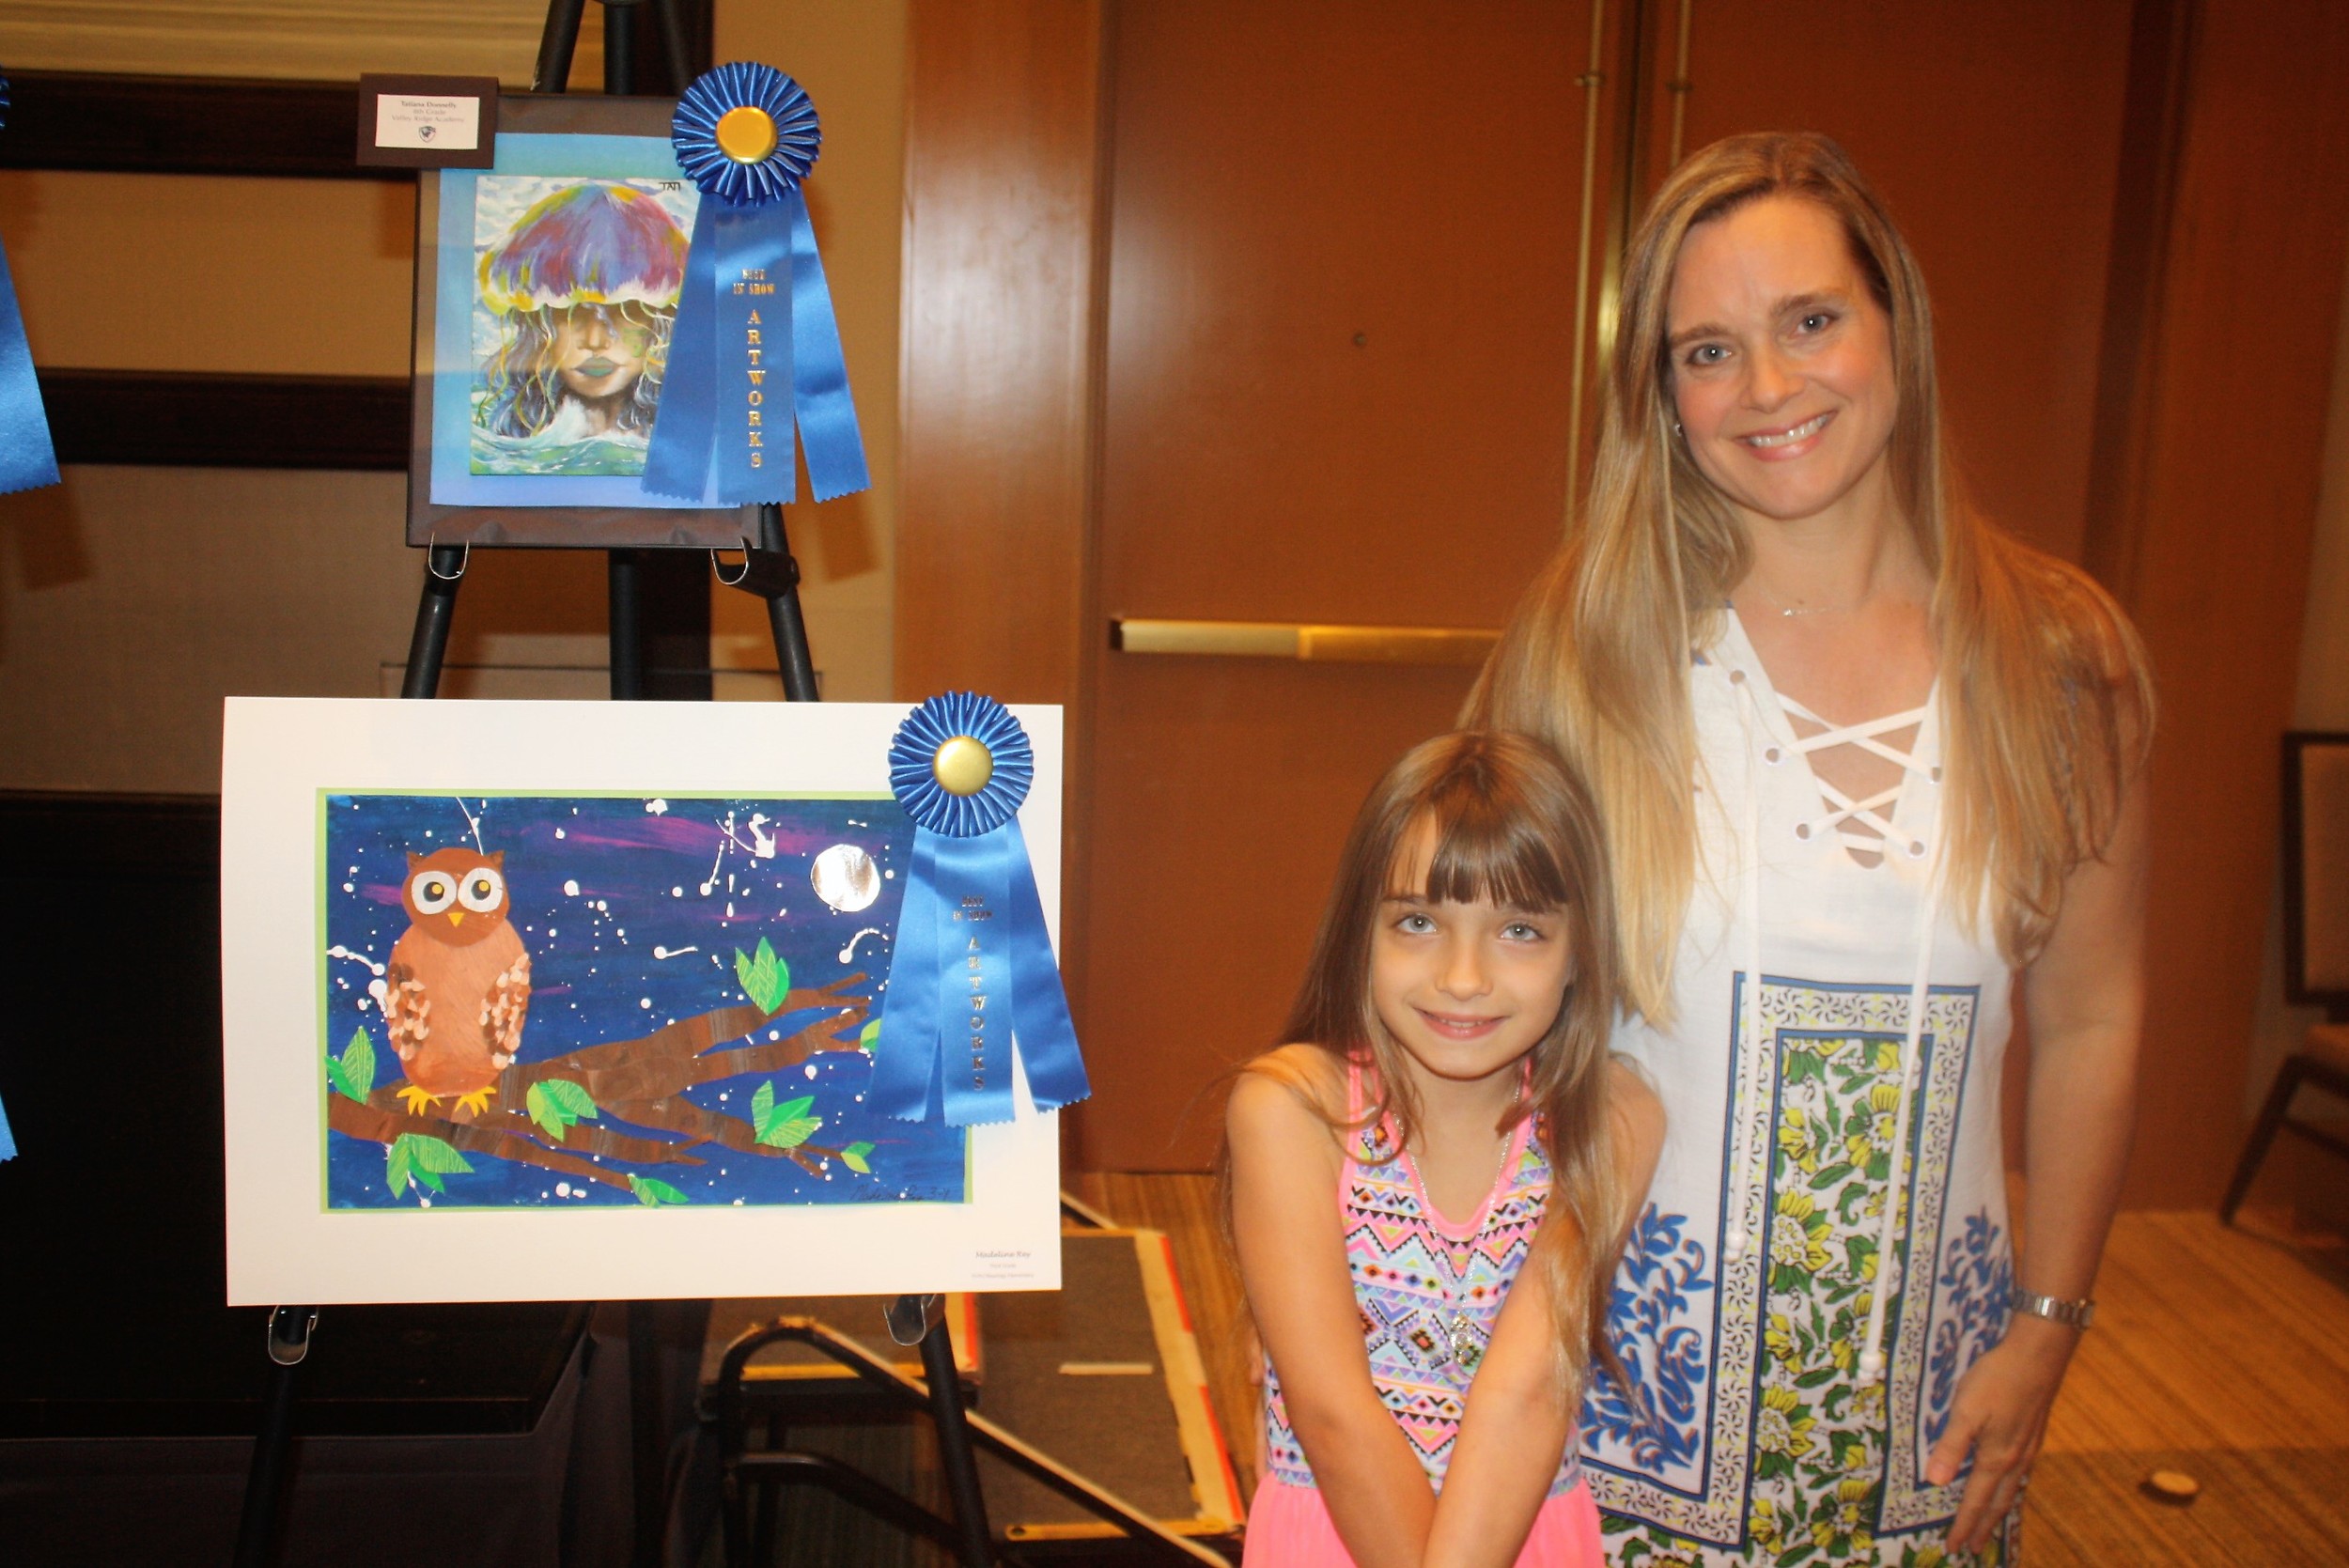 Madeline Rey and her mother, Deborah, stand next to Madeline's prize winning artwork (bottom)